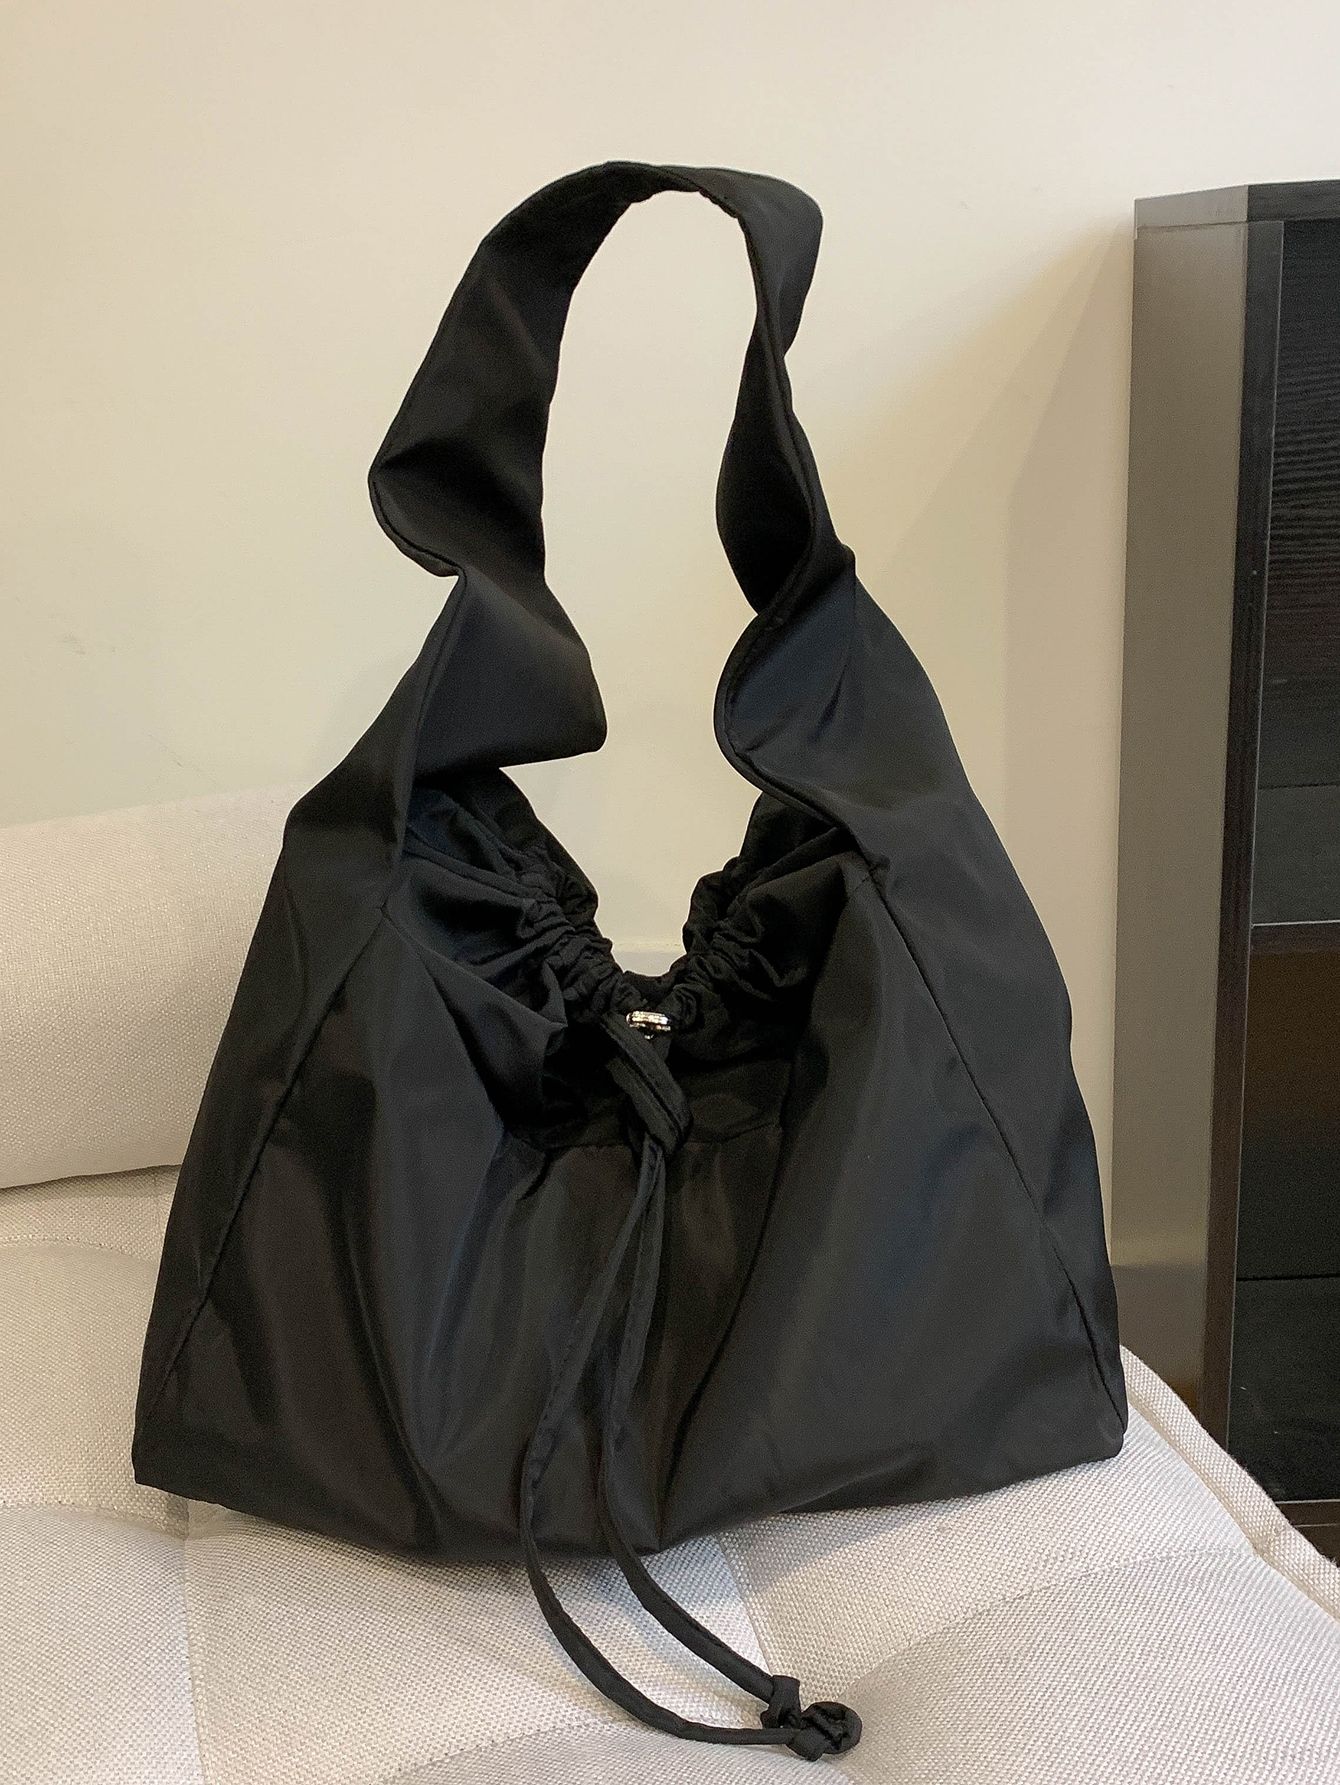 Boho Chic: Exploring Hobo Bags Designs